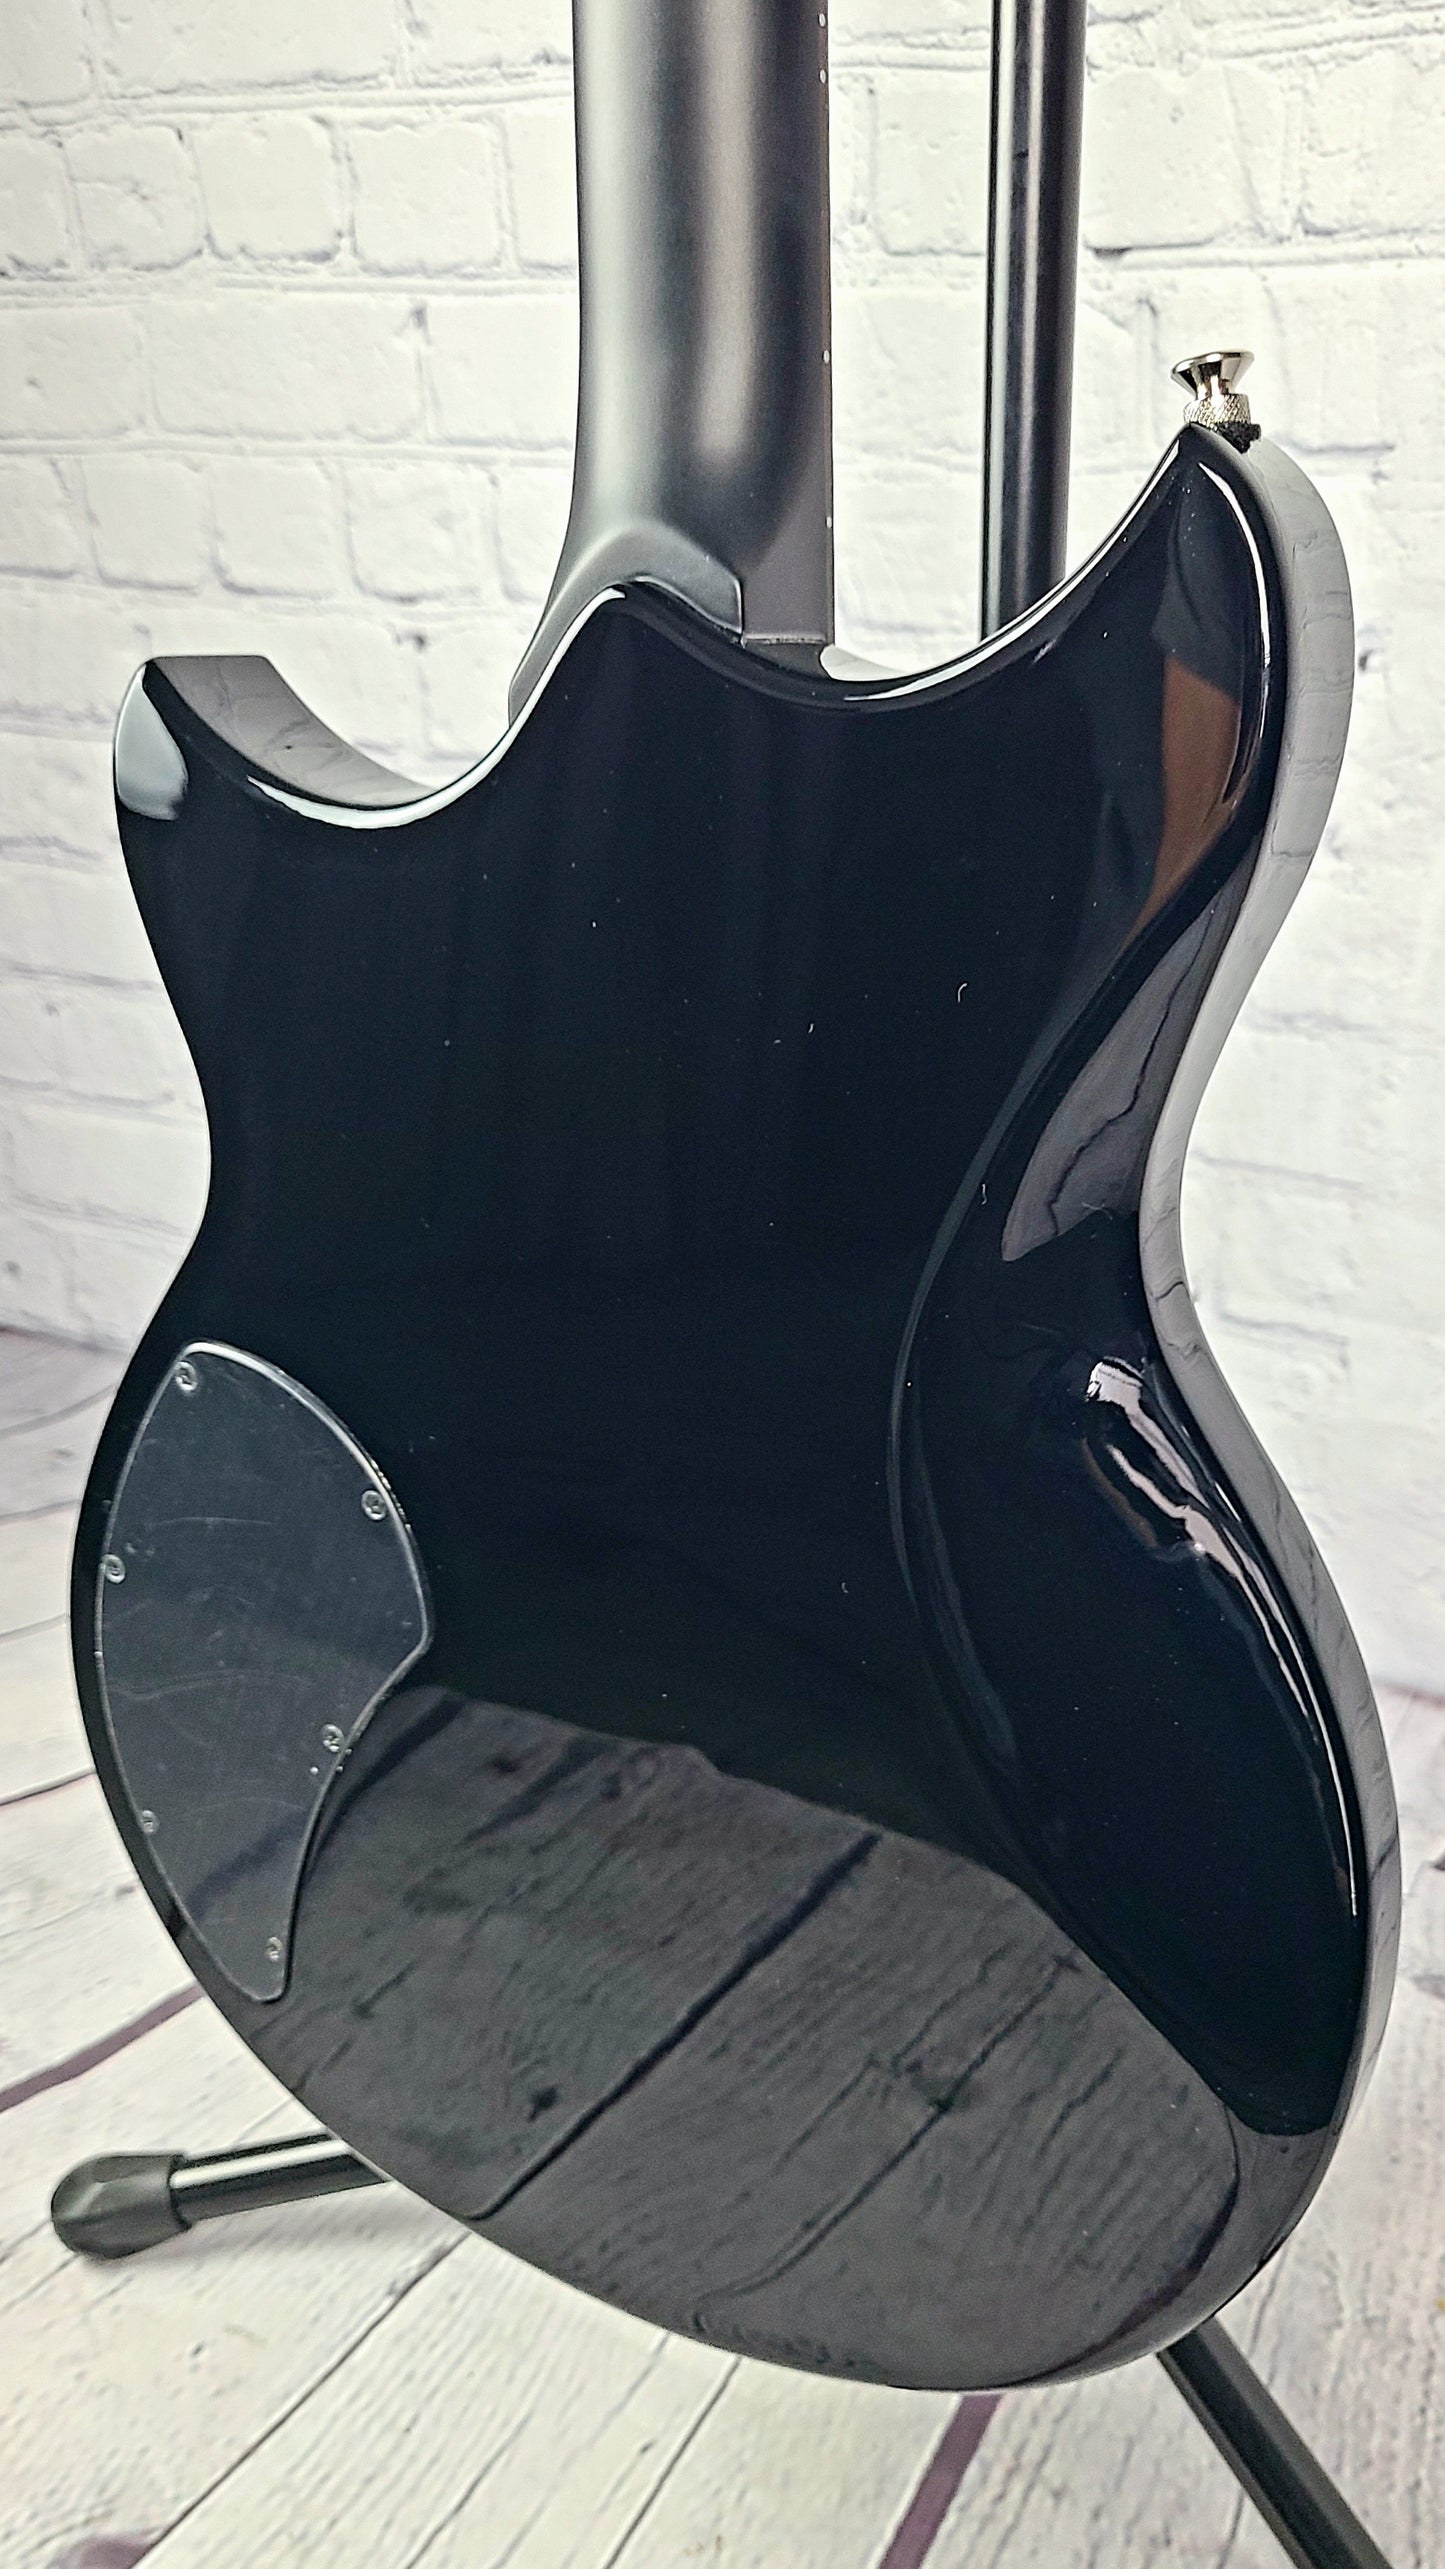 Yamaha Revstar II Element RSE20 BL Gloss Black Electric Guitar